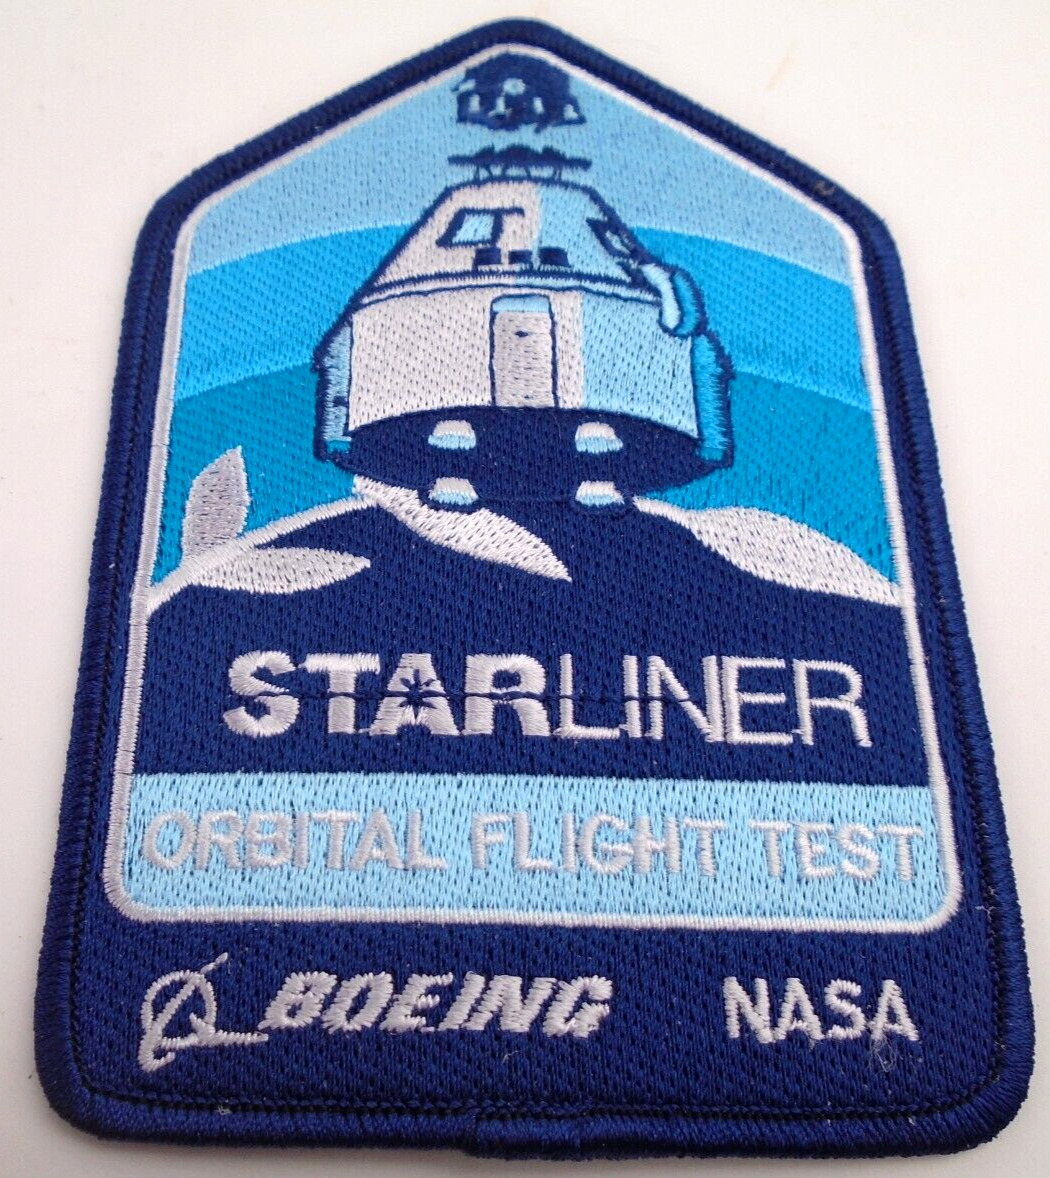 Authentic Boeing Starliner Orbital Flight Test Patch NASA Sew on Jacket Coat